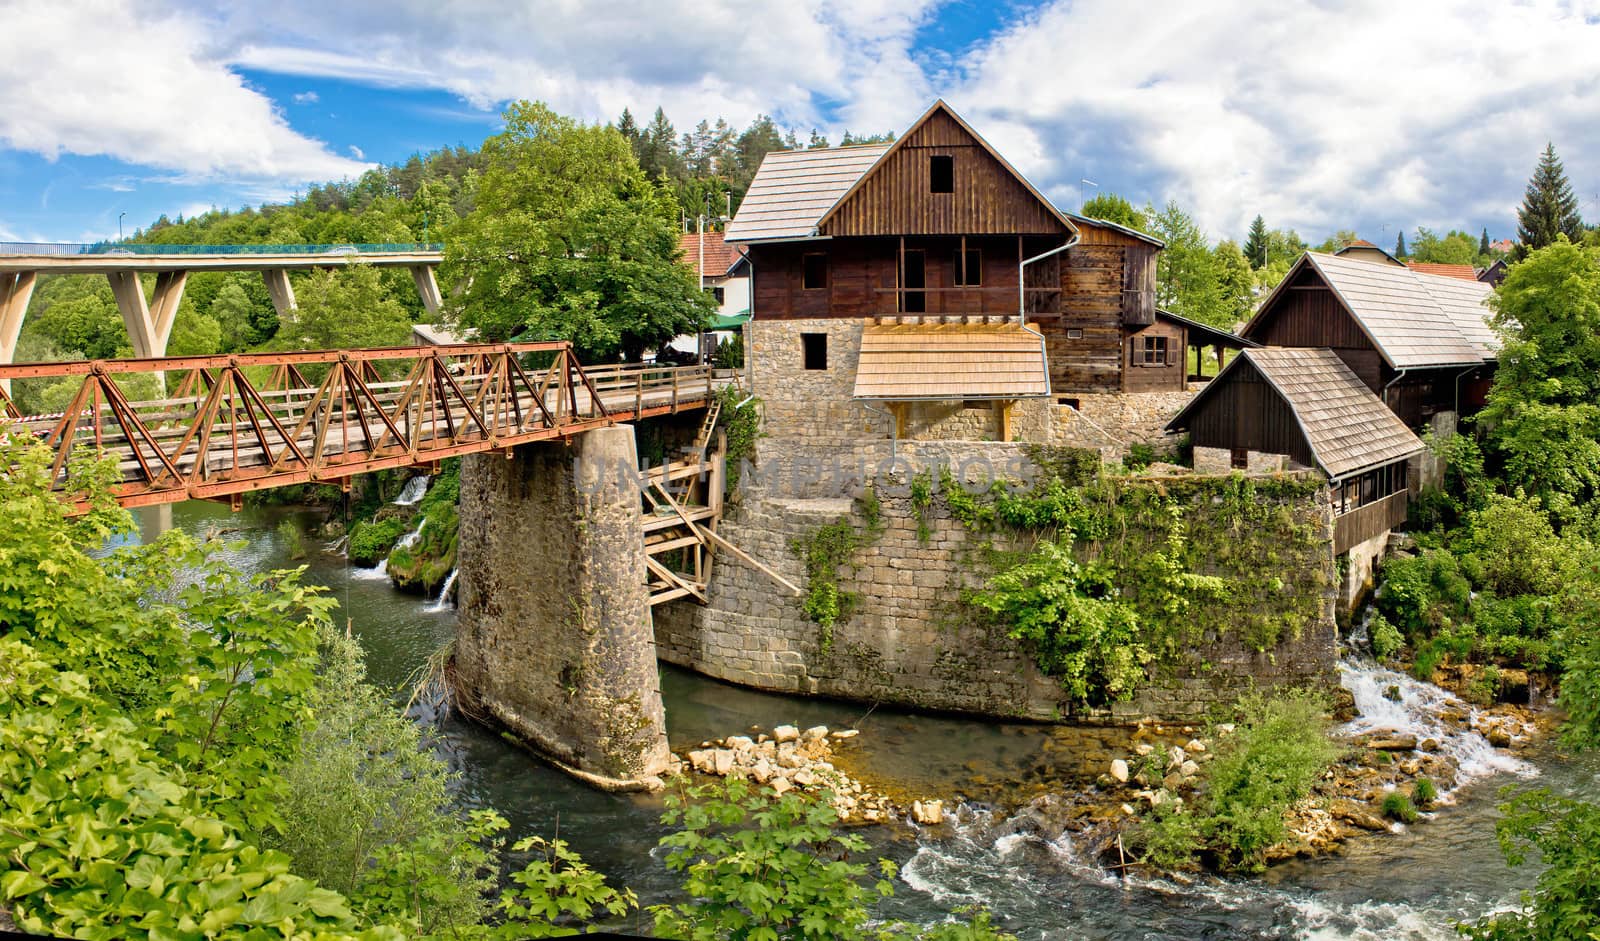 Village of Rastoke river canyon and stone architecture, Croatia